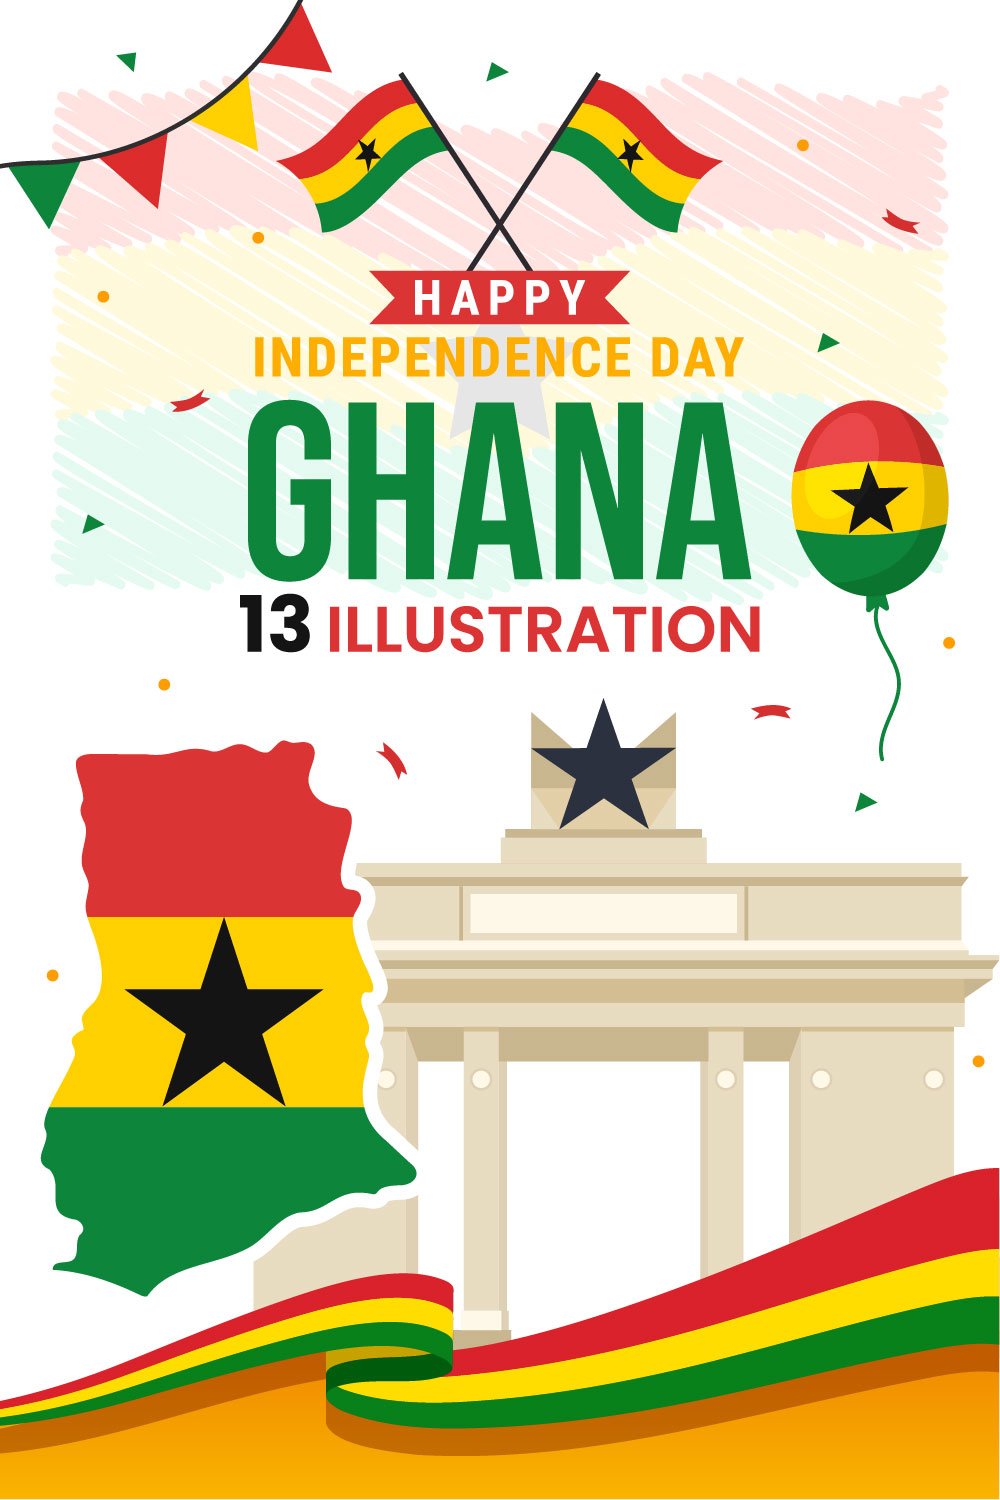 13 Ghana Independence Day Illustration pinterest preview image.